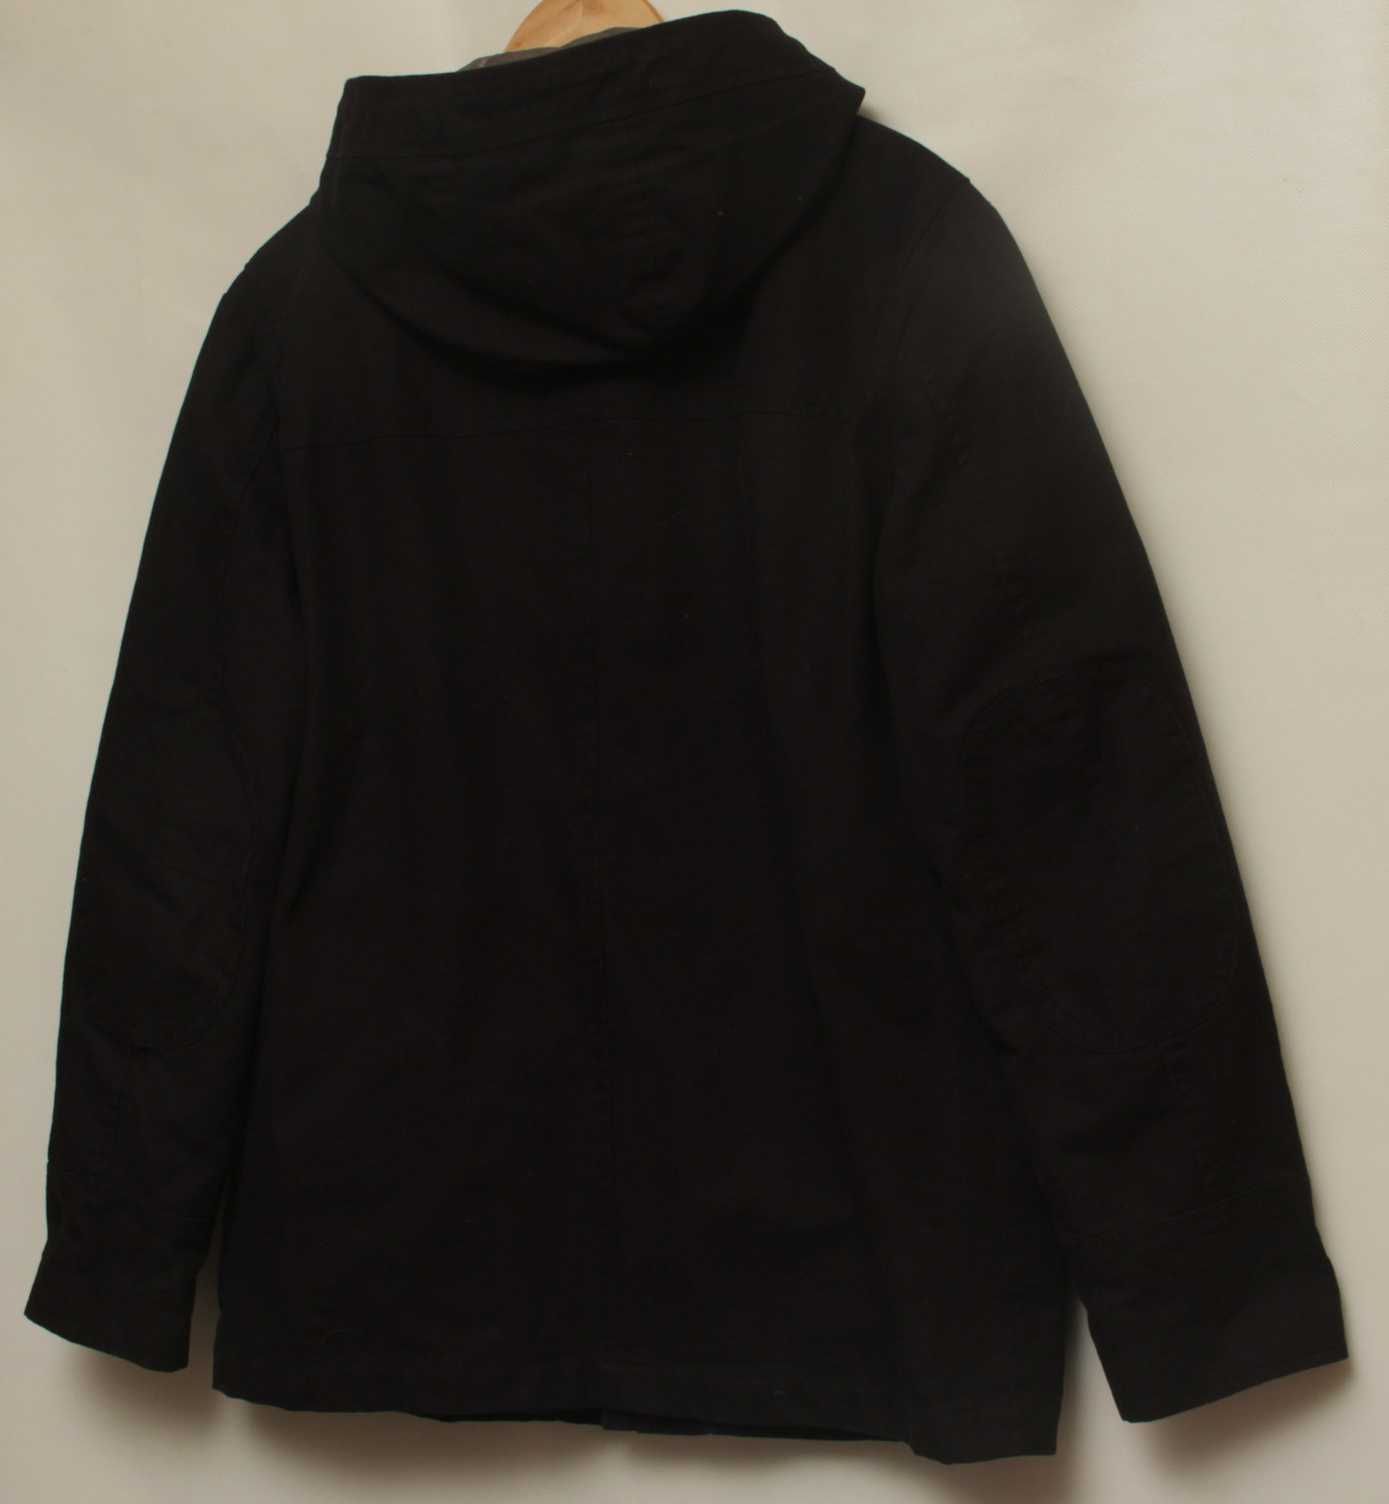 H&M Duffle coat black рр 50 M пальто из хлопка